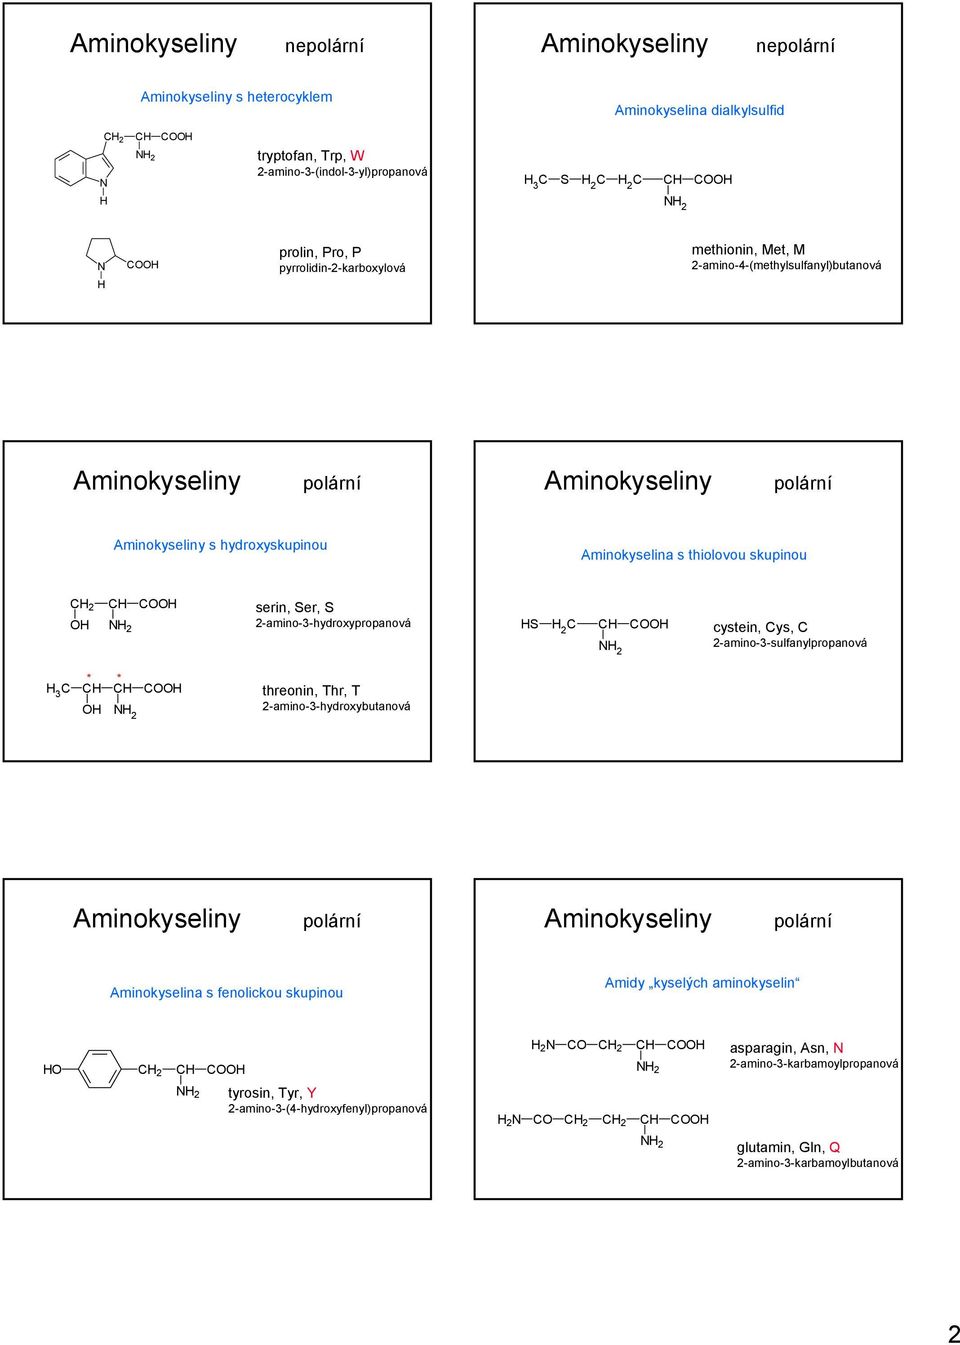 2-amino-3-hydroxypropanová S 2 cystein, ys, 2-amino-3-sulfanylpropanová 3 * * threonin, Thr, T -amino-3-hydroxybutanová 2 polární polární Aminokyselina s